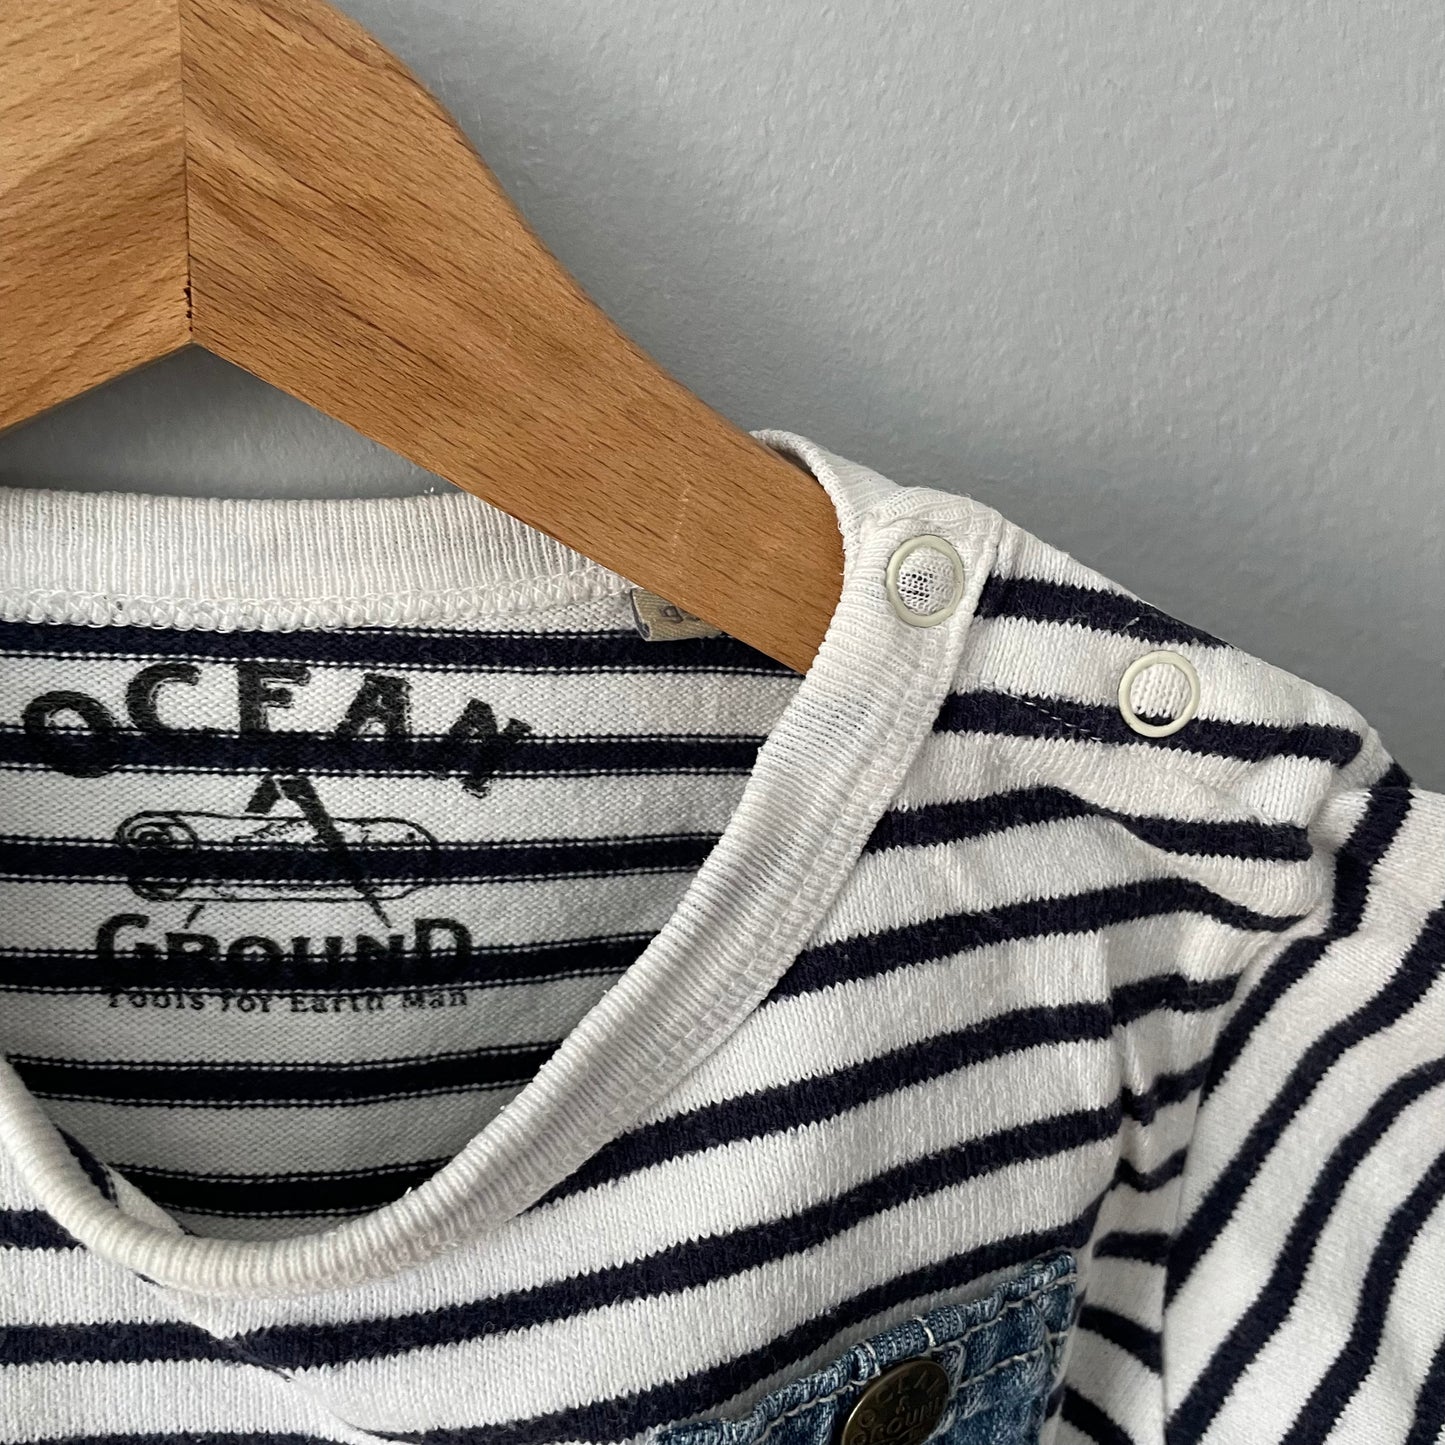 Ocean Ground / Striped T-shirt / 3T